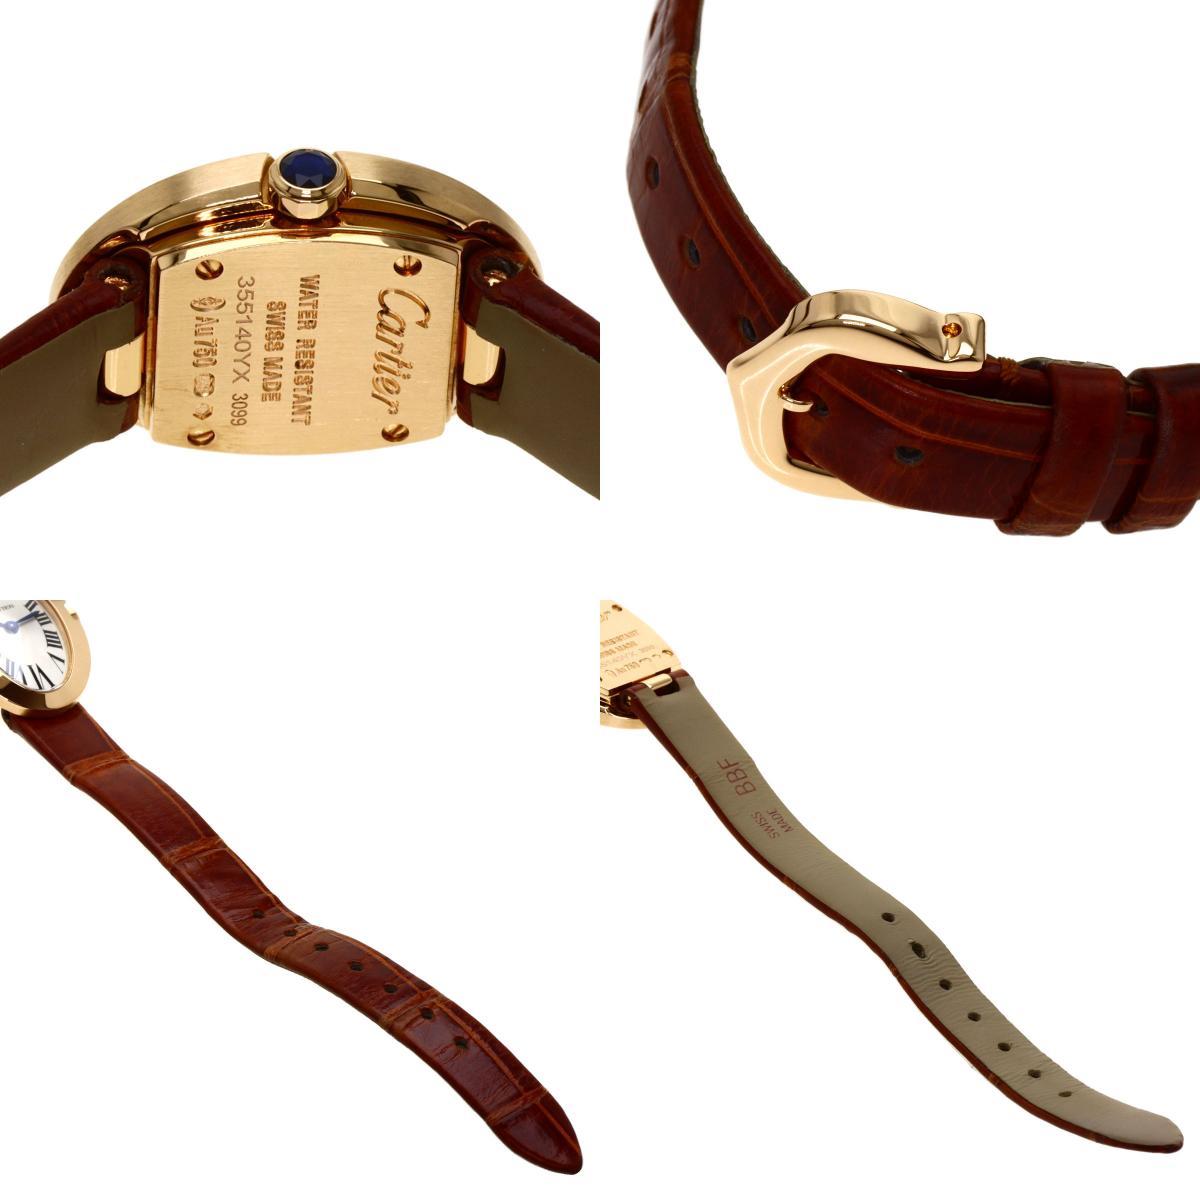 CARTIER Cartier W8000017 Mini Baignoire наручные часы K18 розовое золото кожа женский б/у 